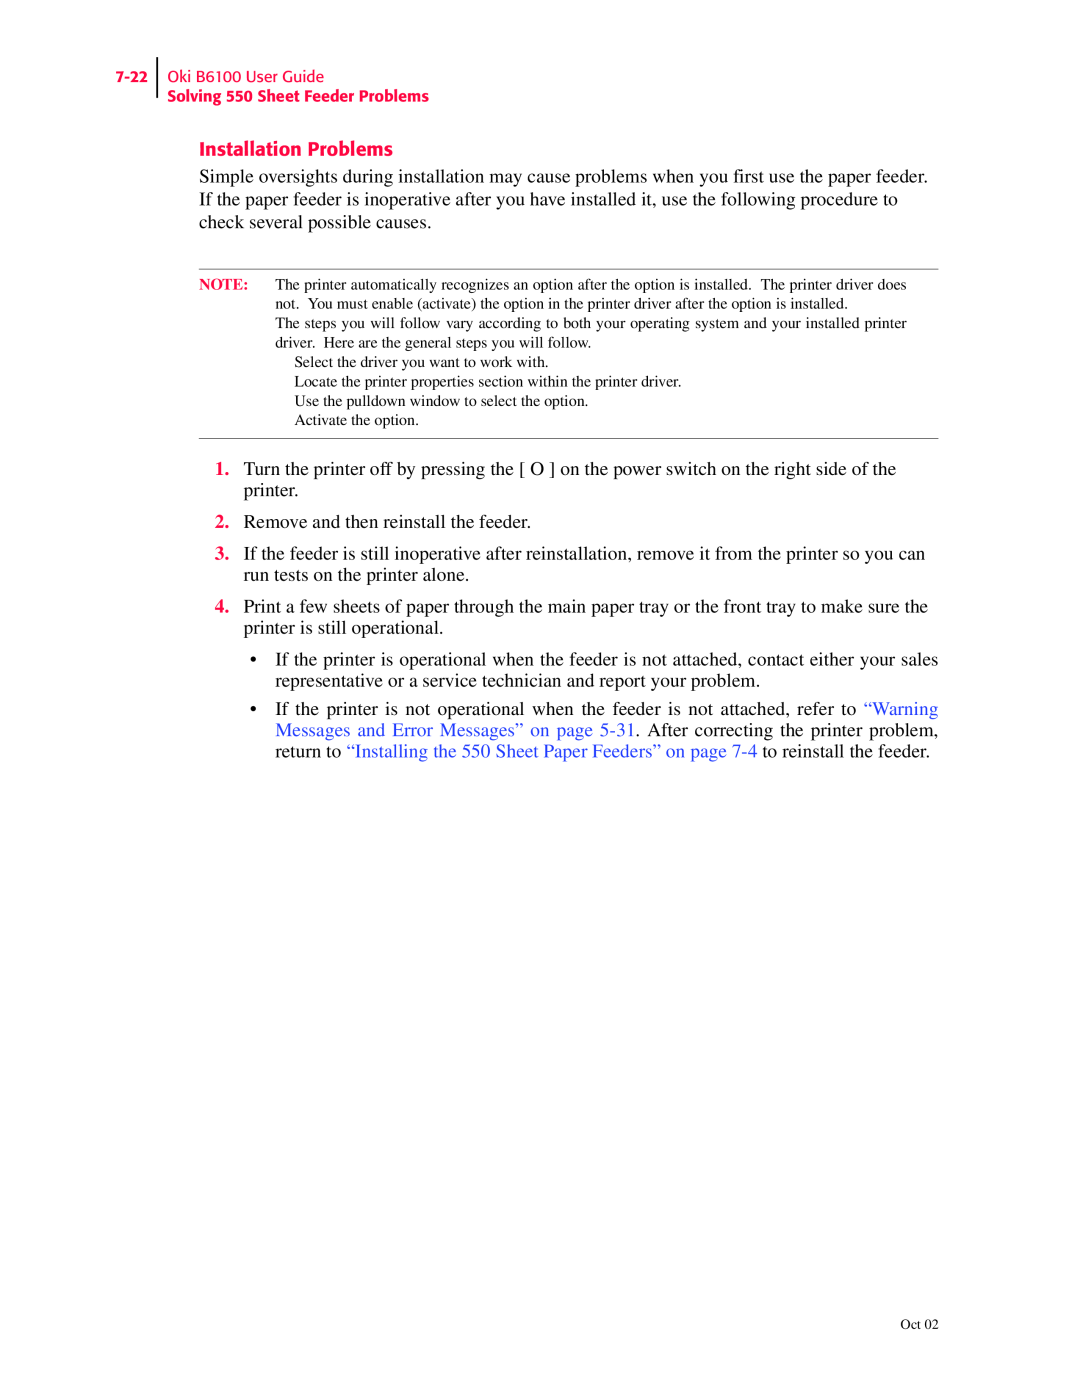 Oki manual Installation Problems, Oki B6100 User Guide Solving 550 Sheet Feeder Problems 